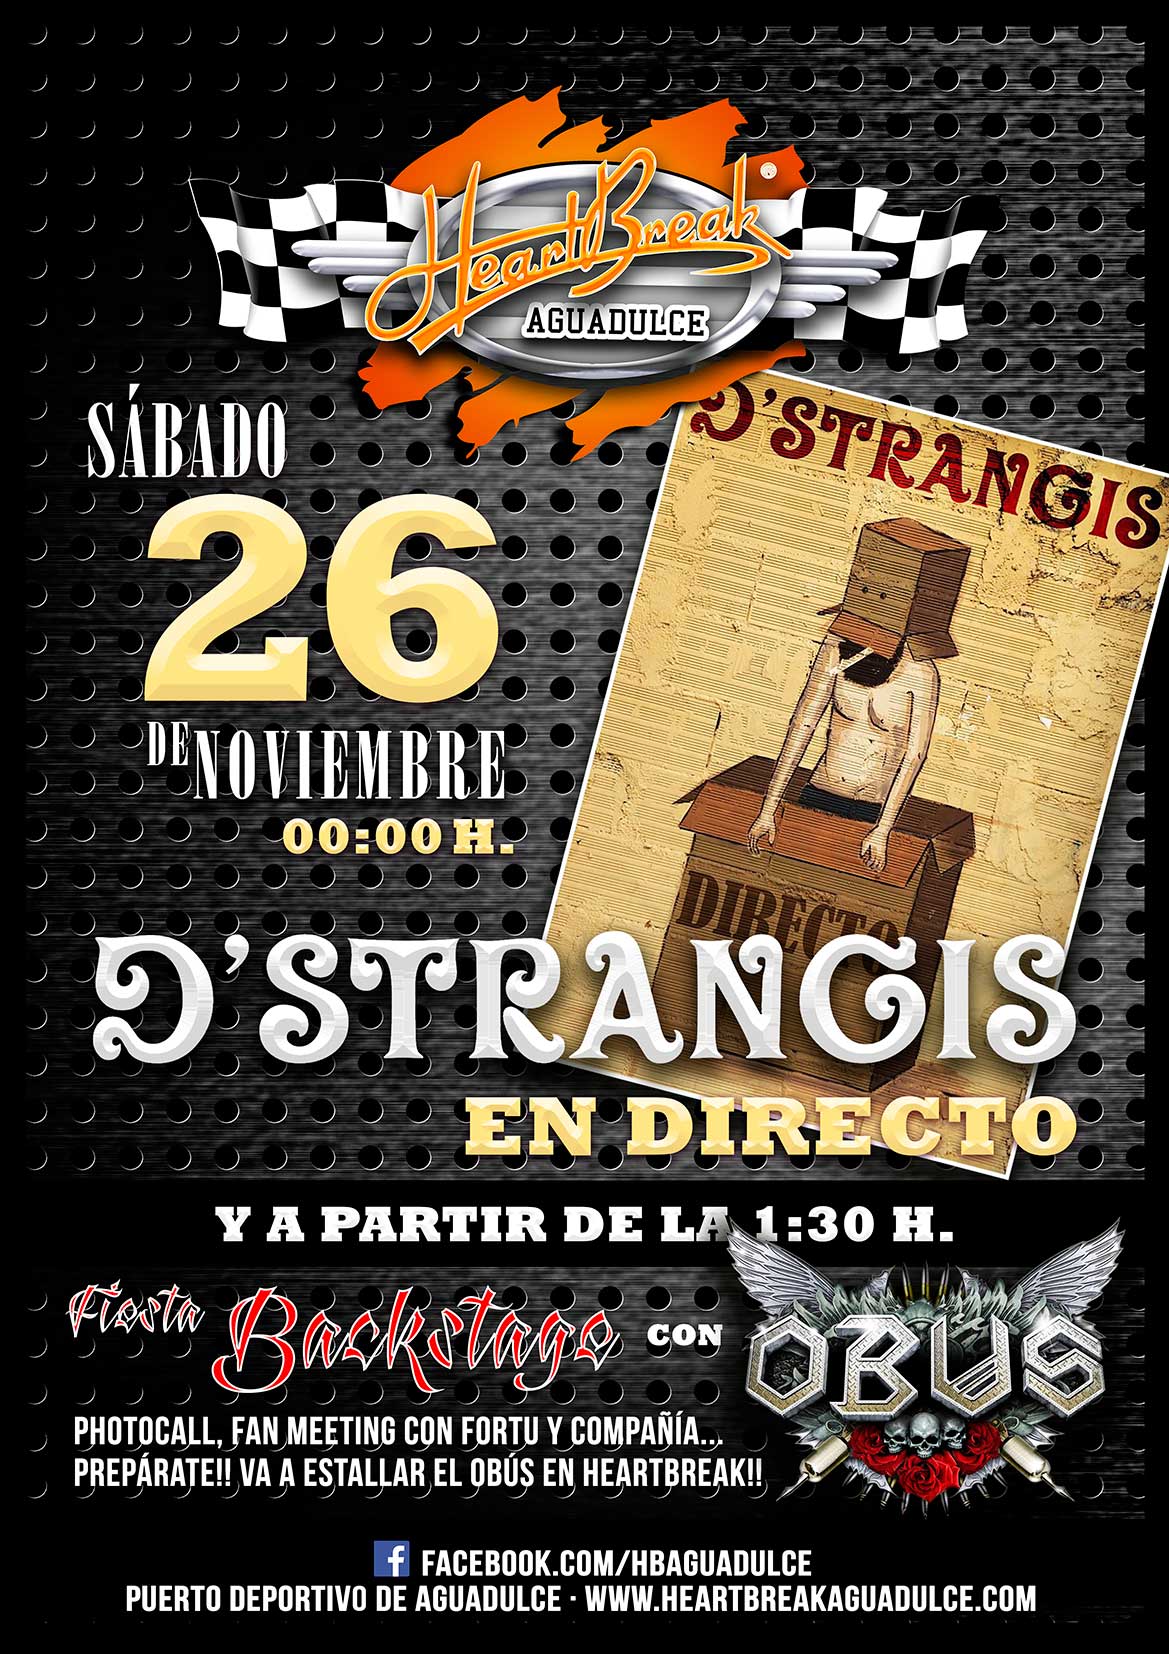 Dstrangis y Fiesta Backstage